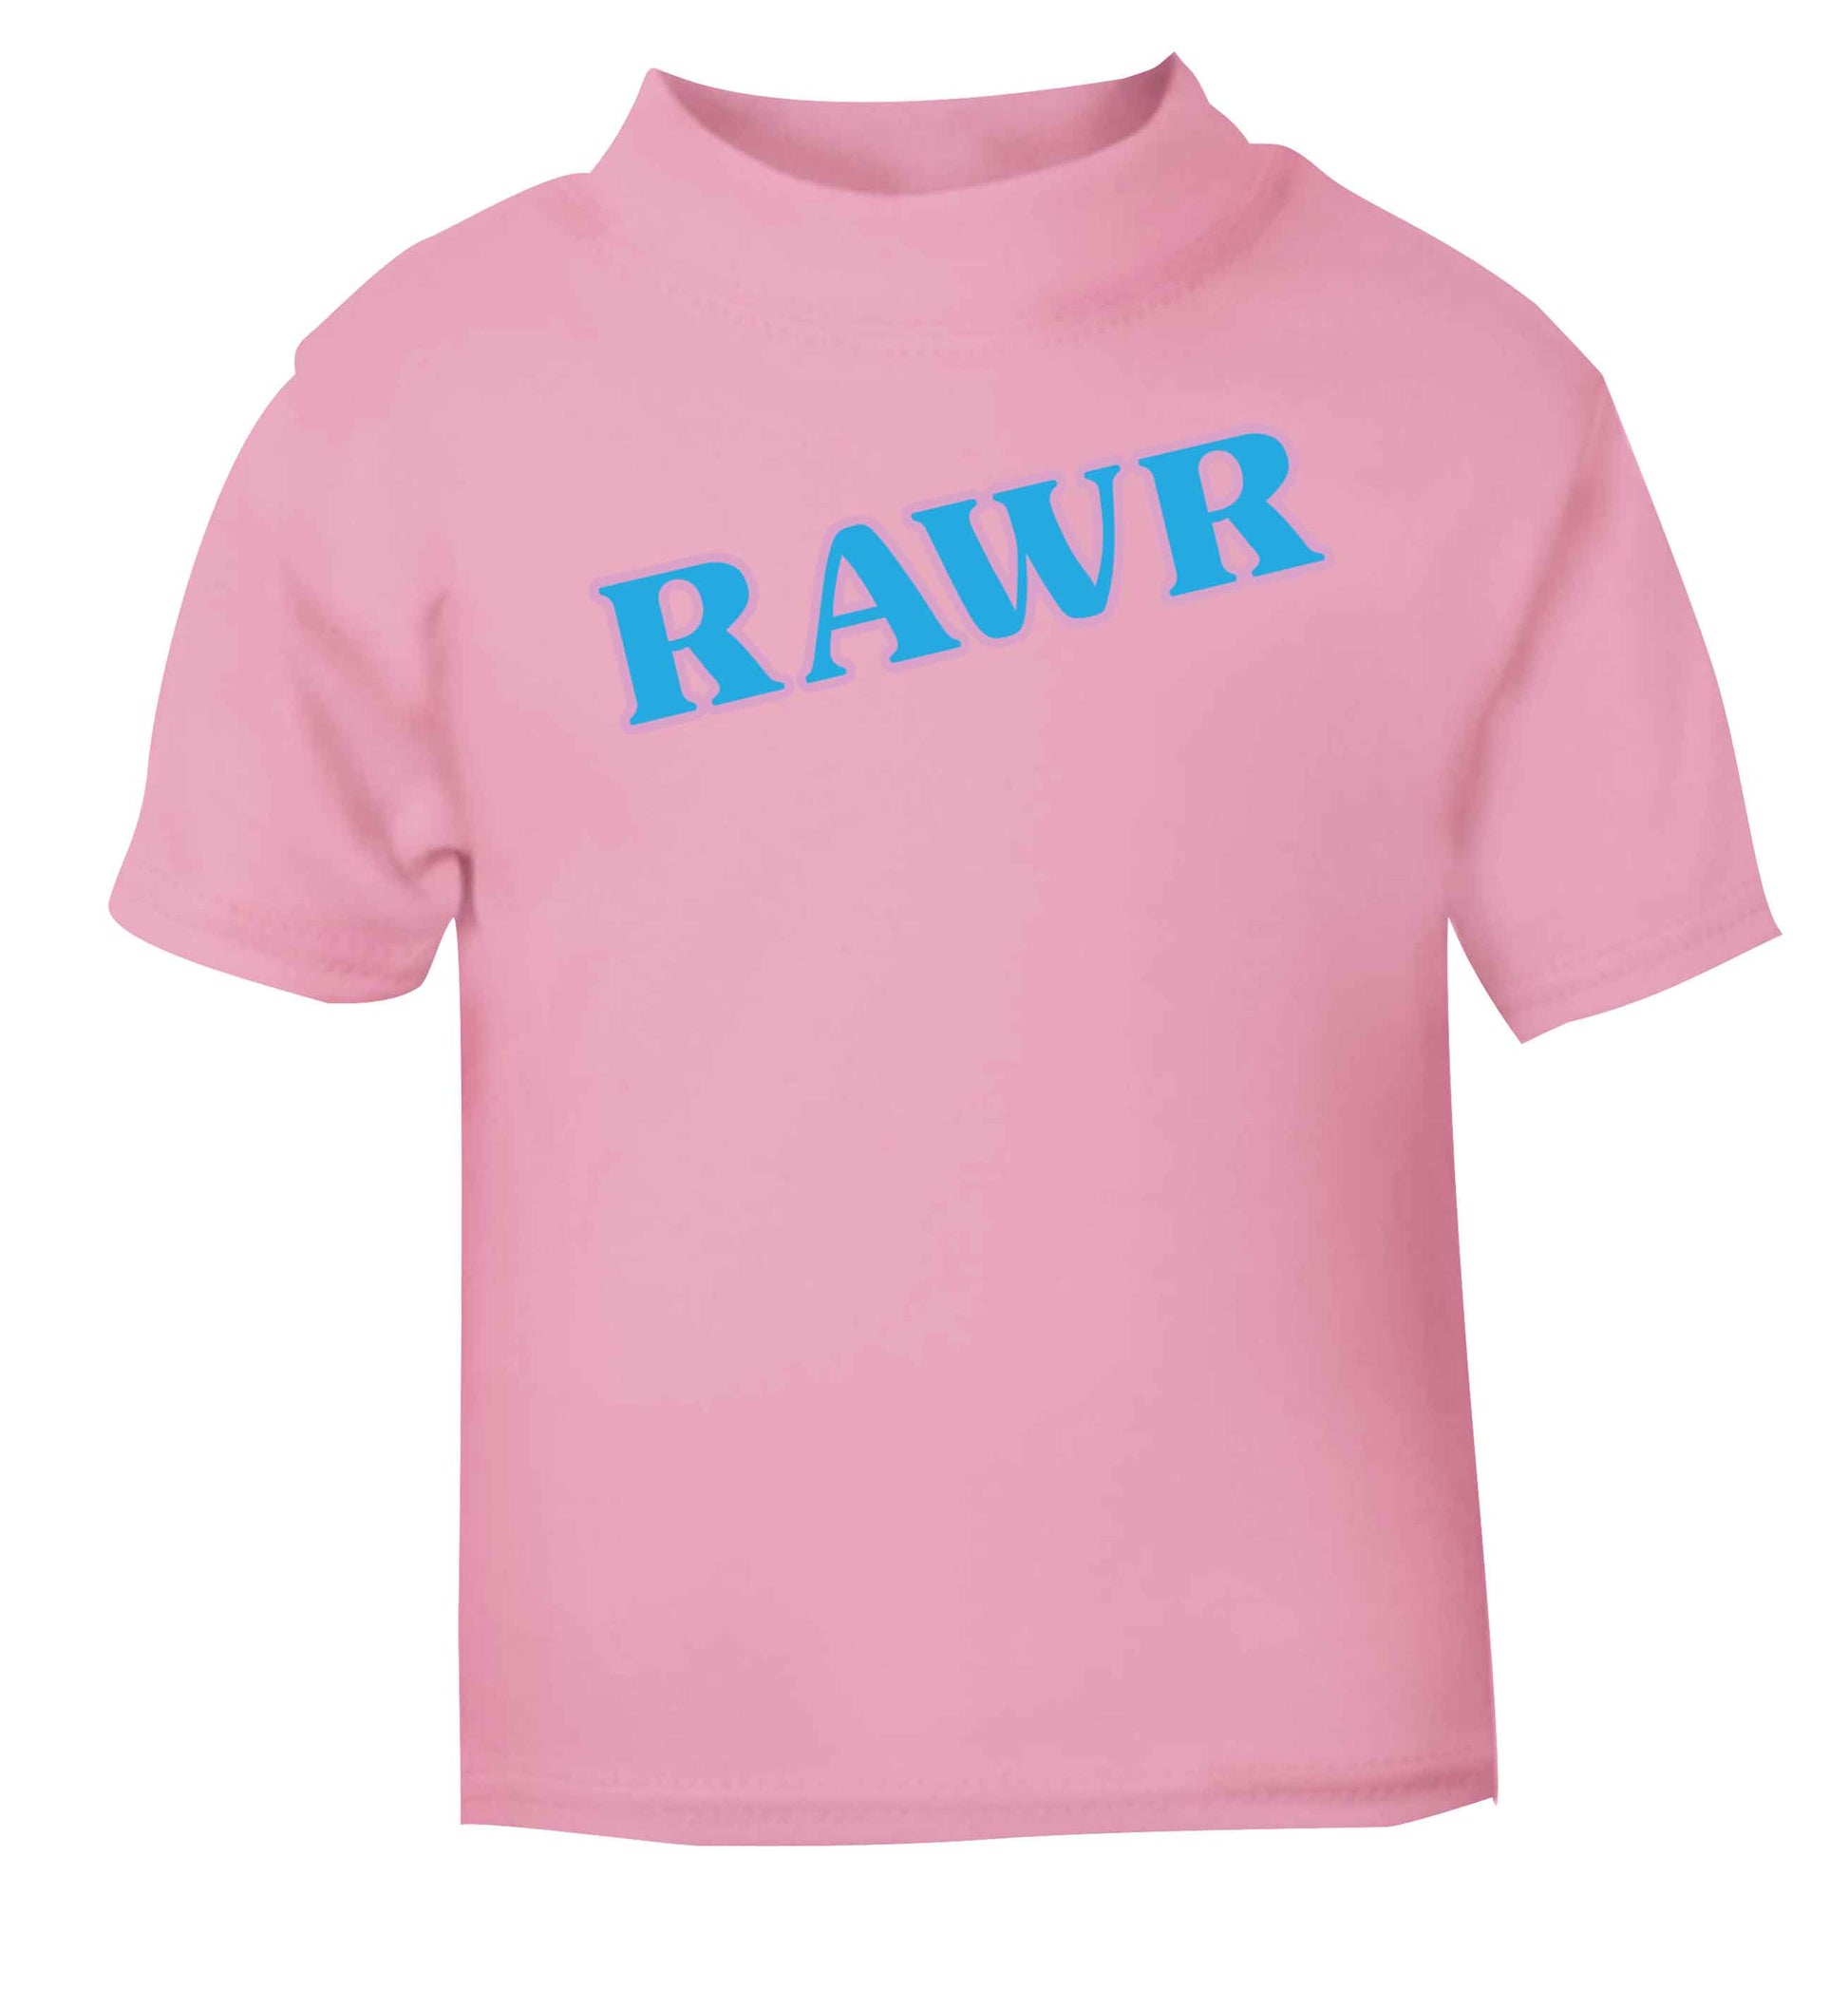 Rawr light pink baby toddler Tshirt 2 Years